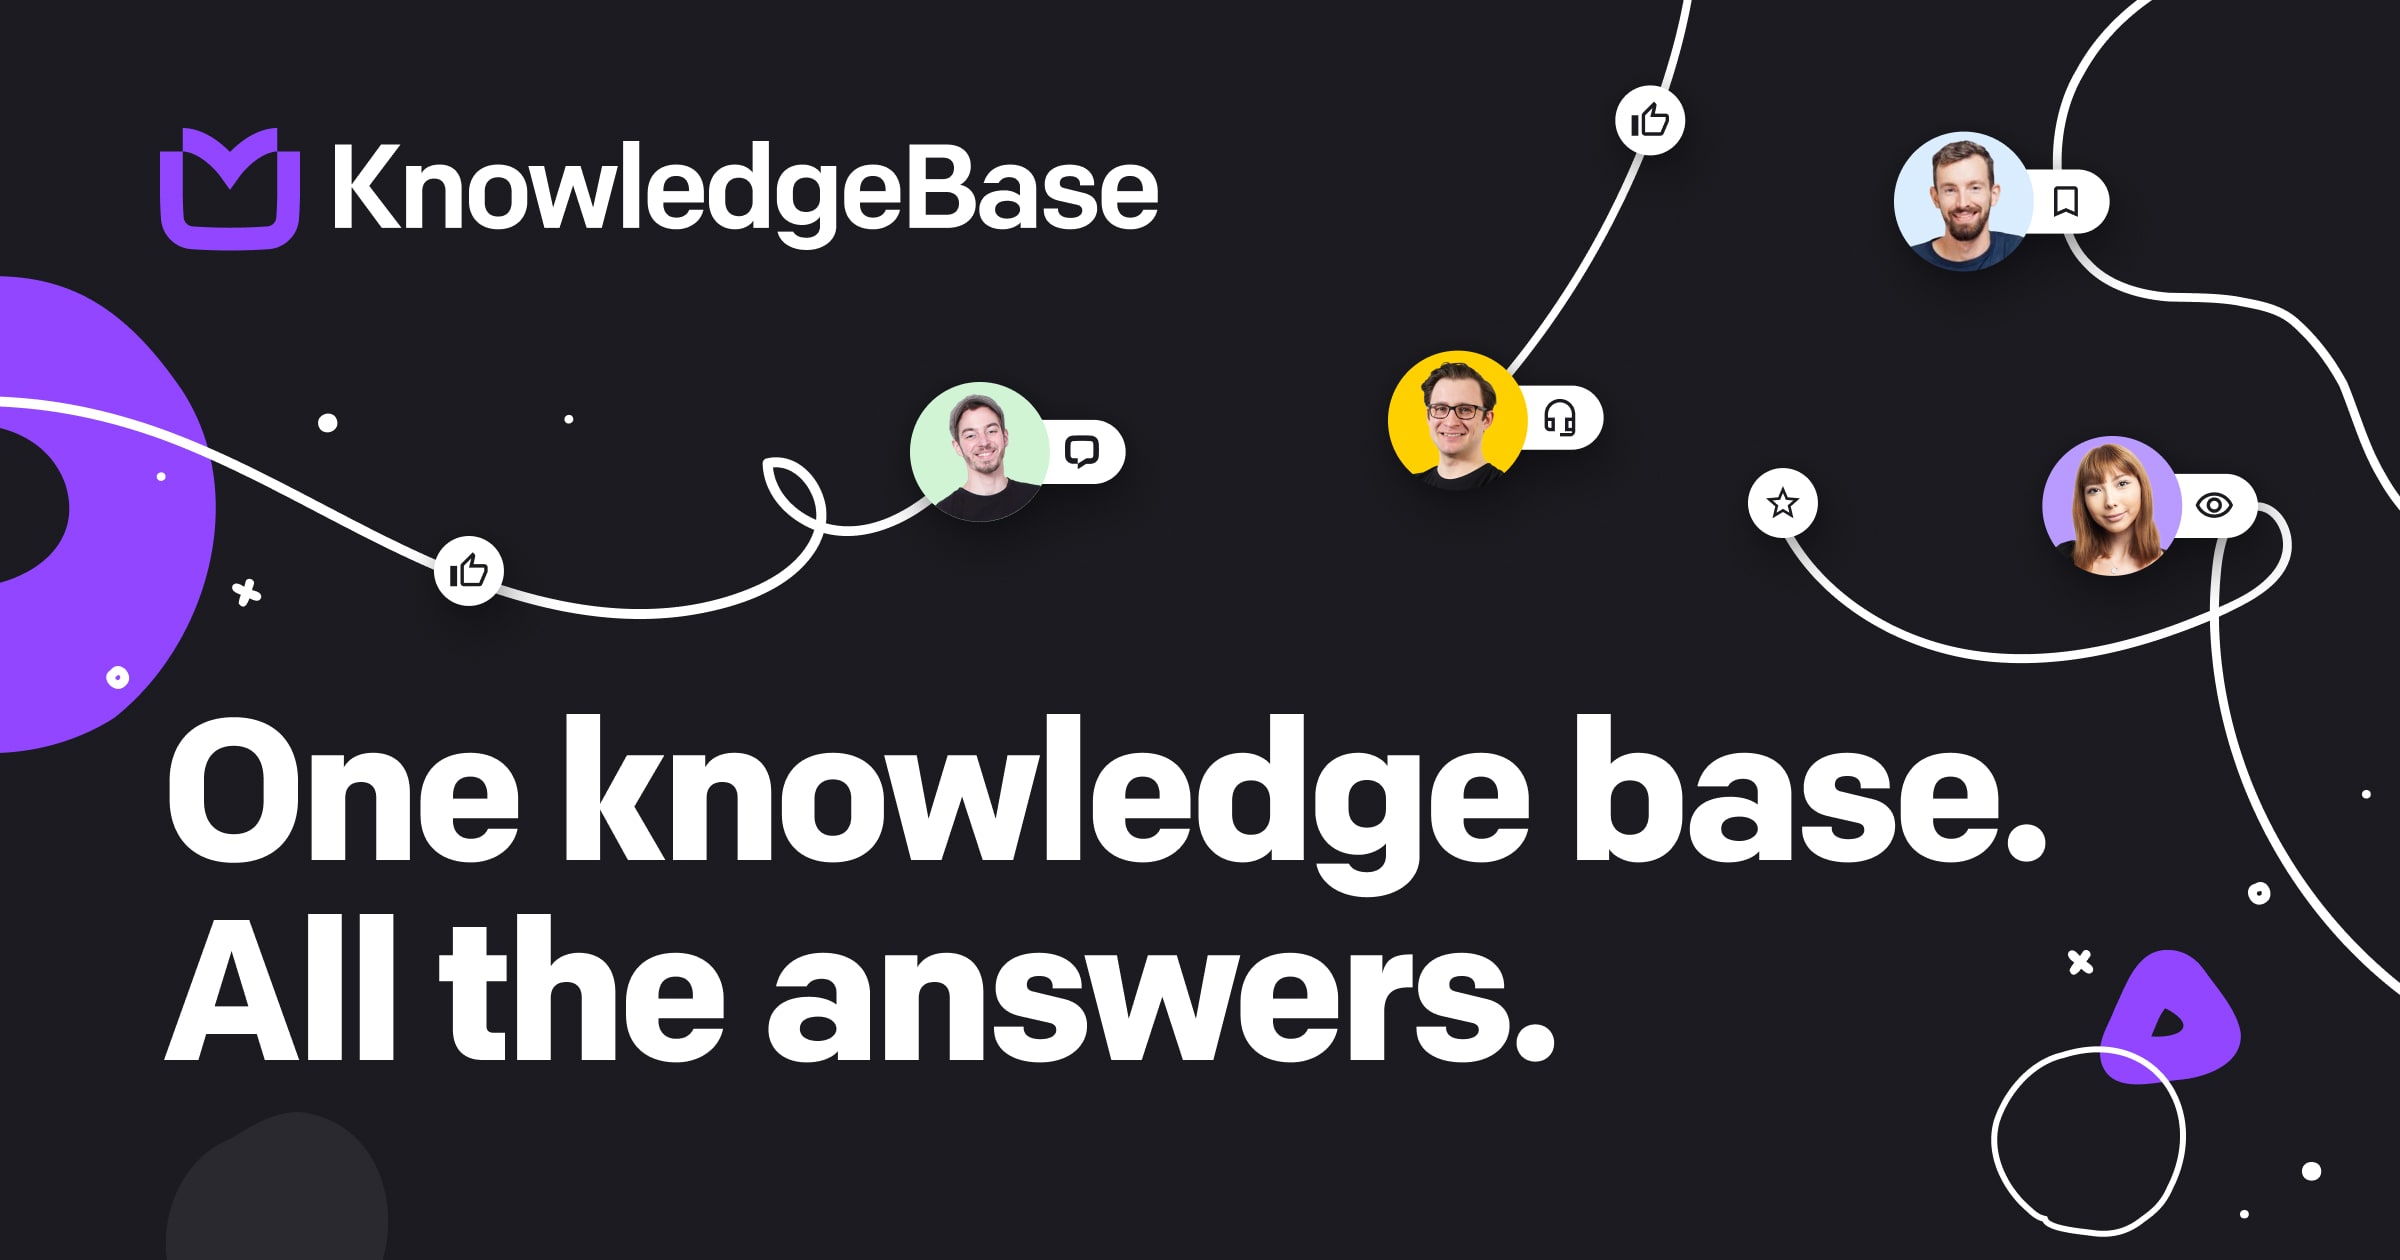 (c) Knowledgebase.com